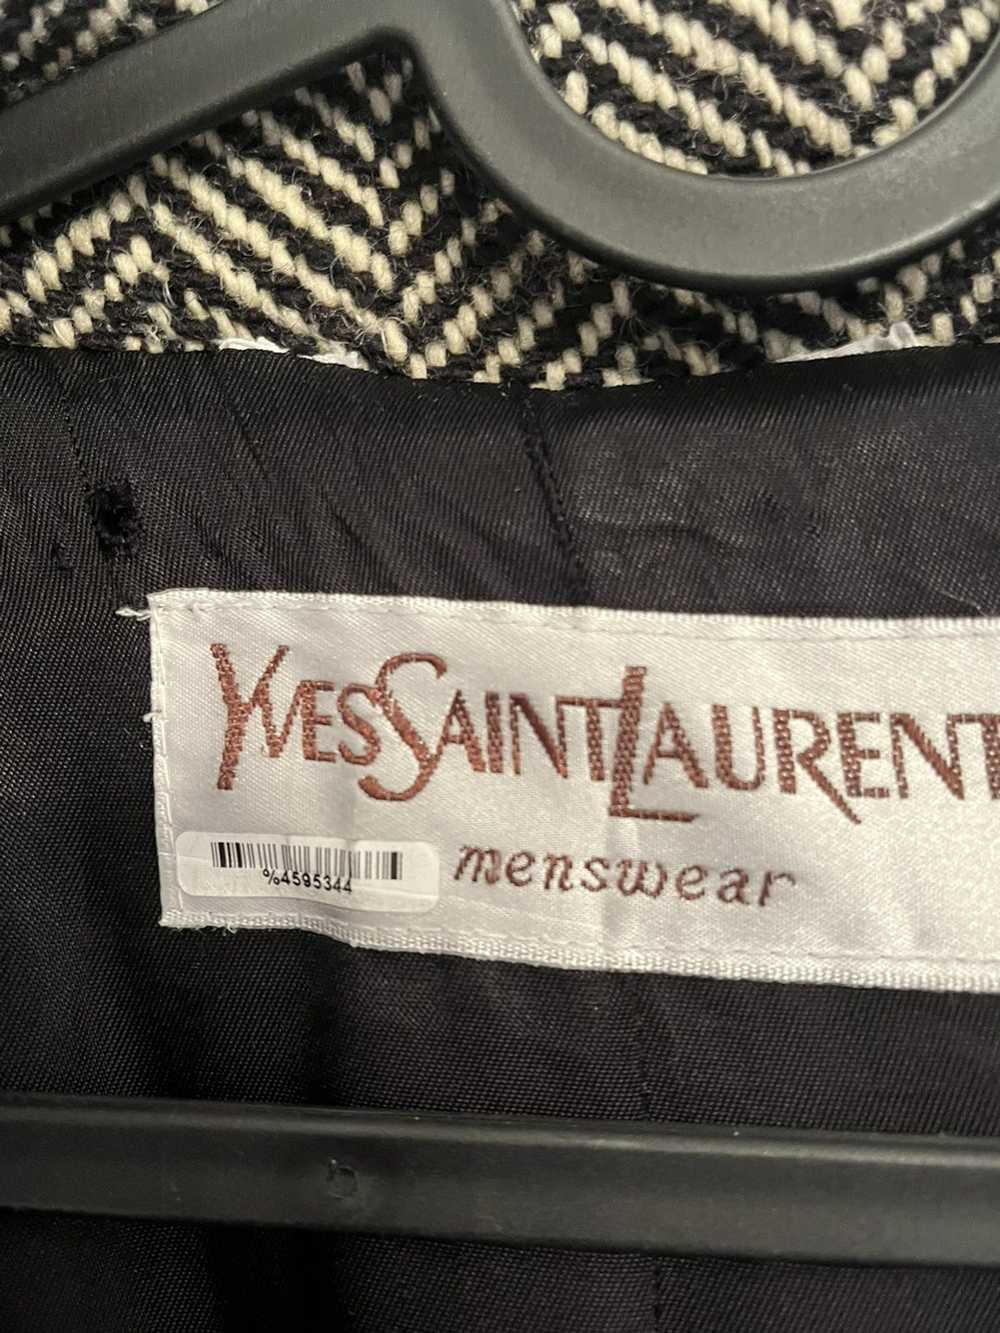 Yves Saint Laurent YSL TOP COAT - image 4